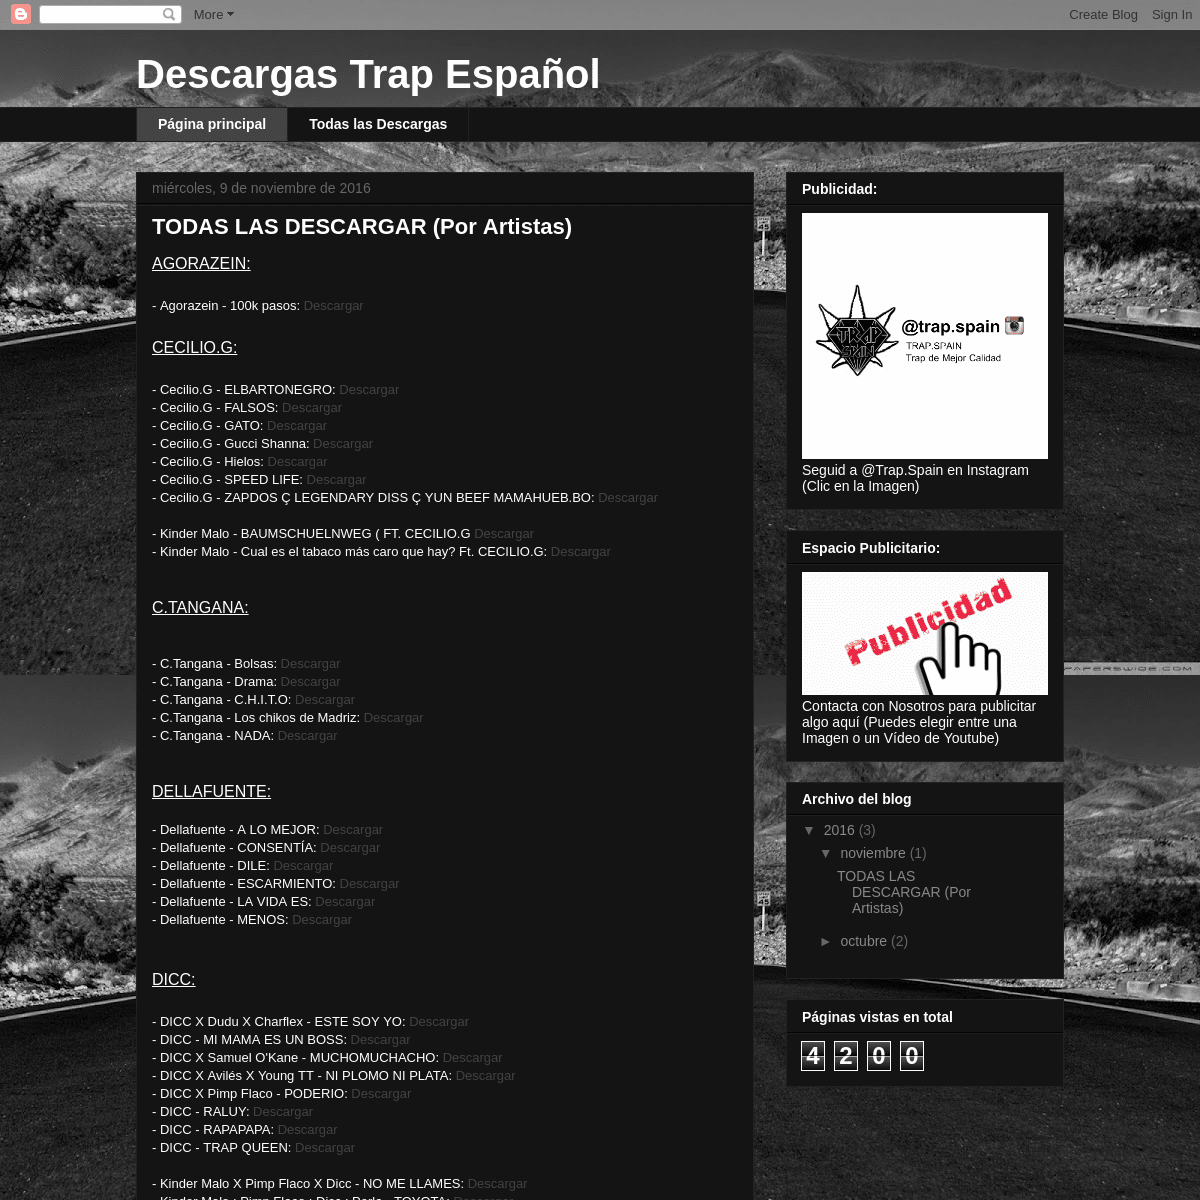 A complete backup of descargartrap.blogspot.com